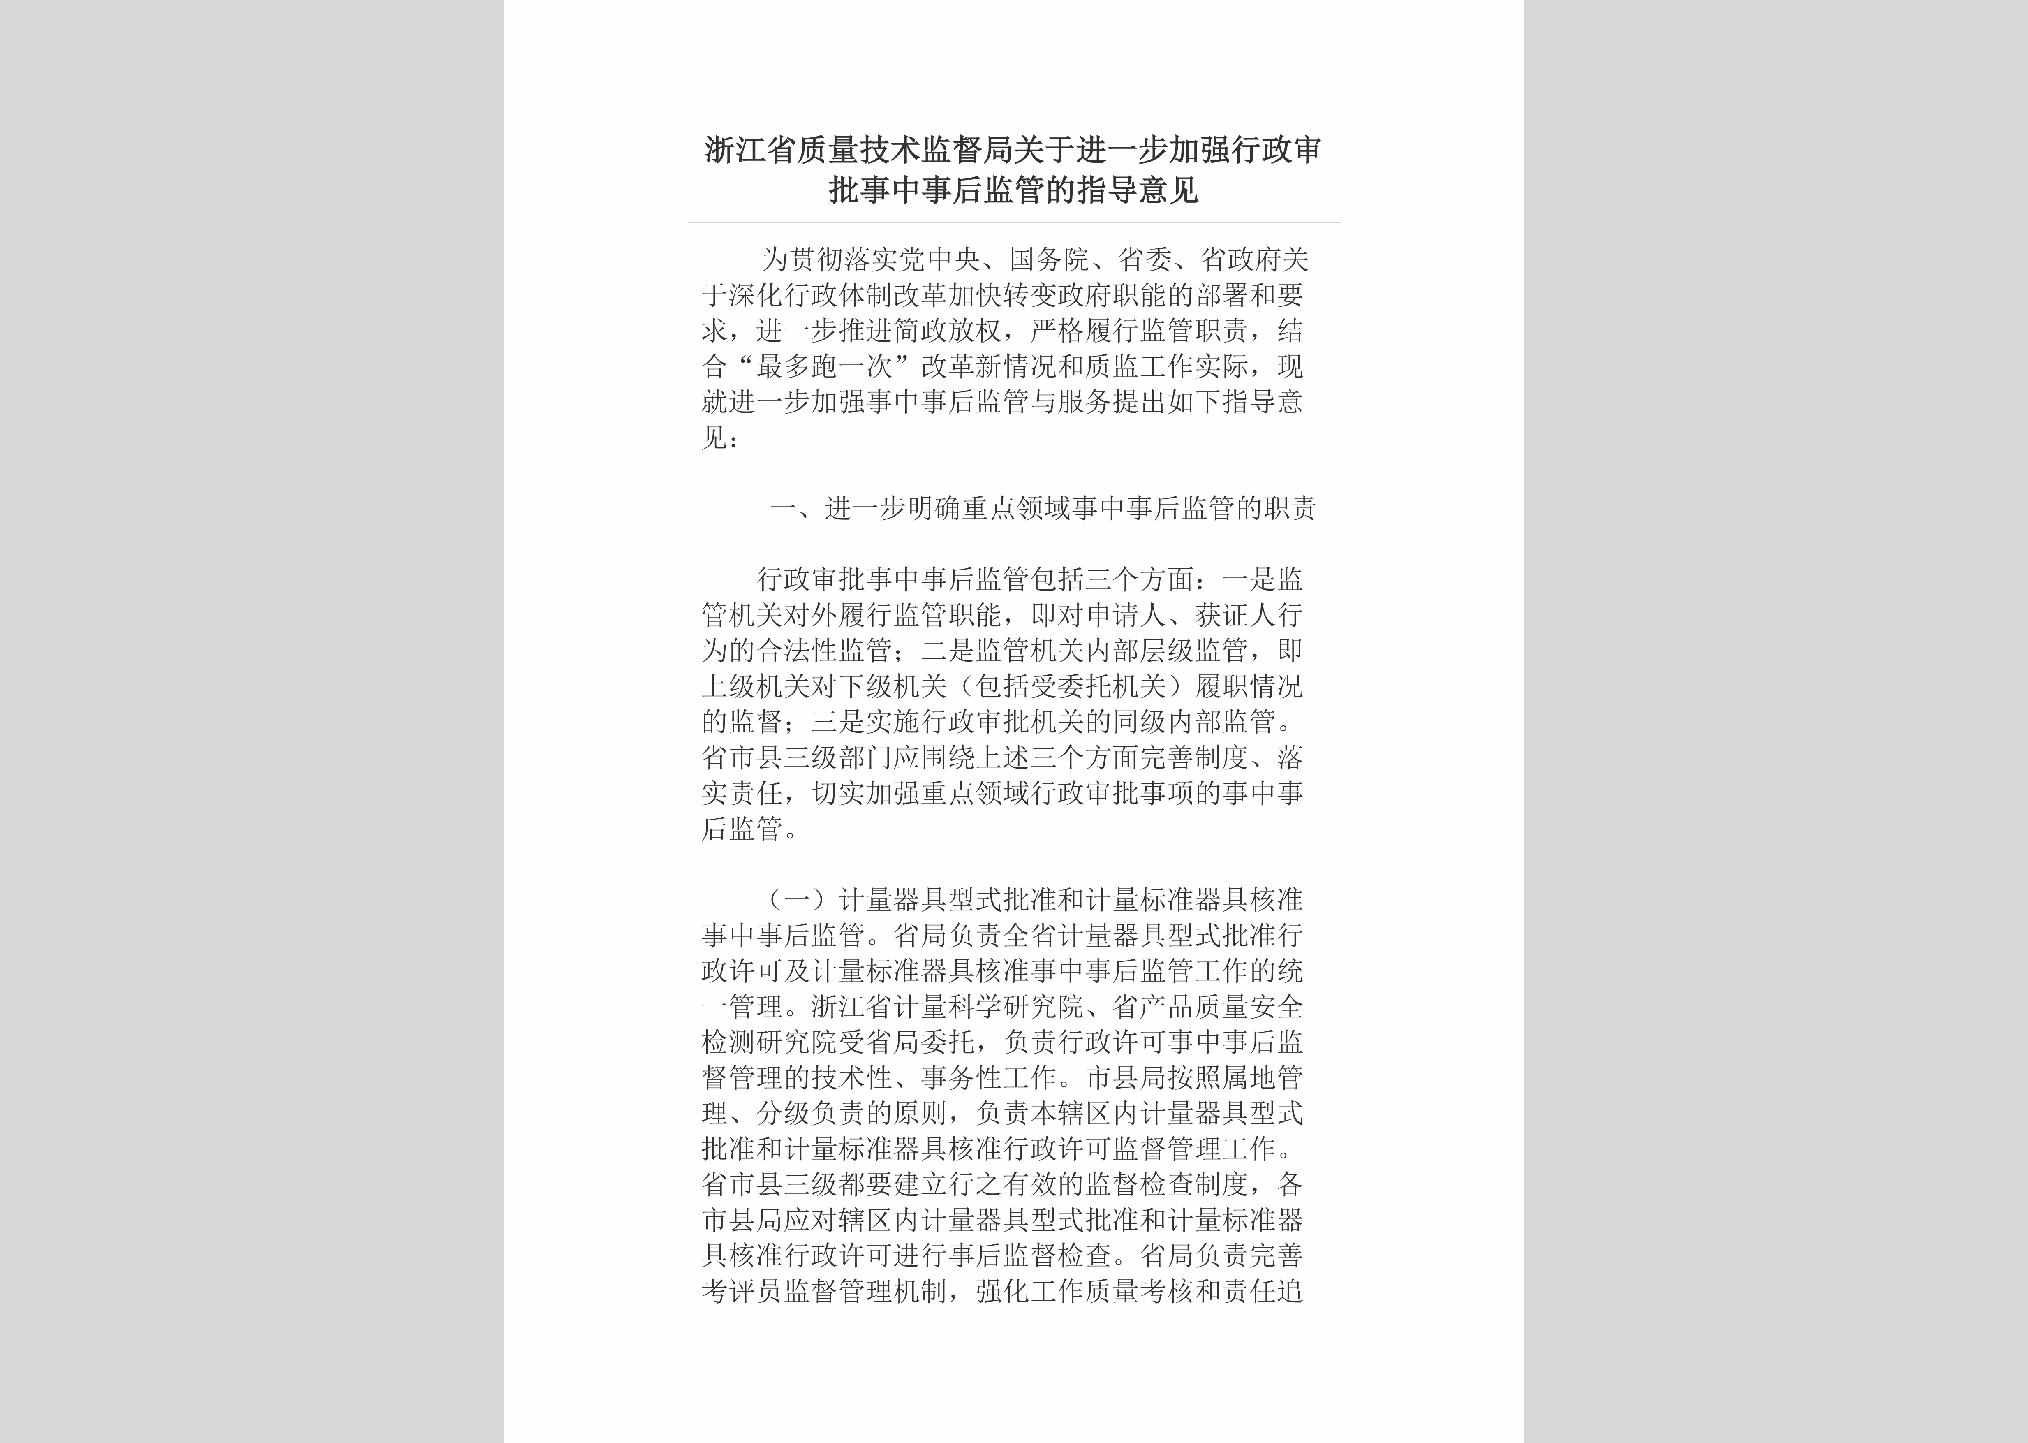 ZJ-HJGDZDYJ-2018：浙江省质量技术监督局关于进一步加强行政审批事中事后监管的指导意见